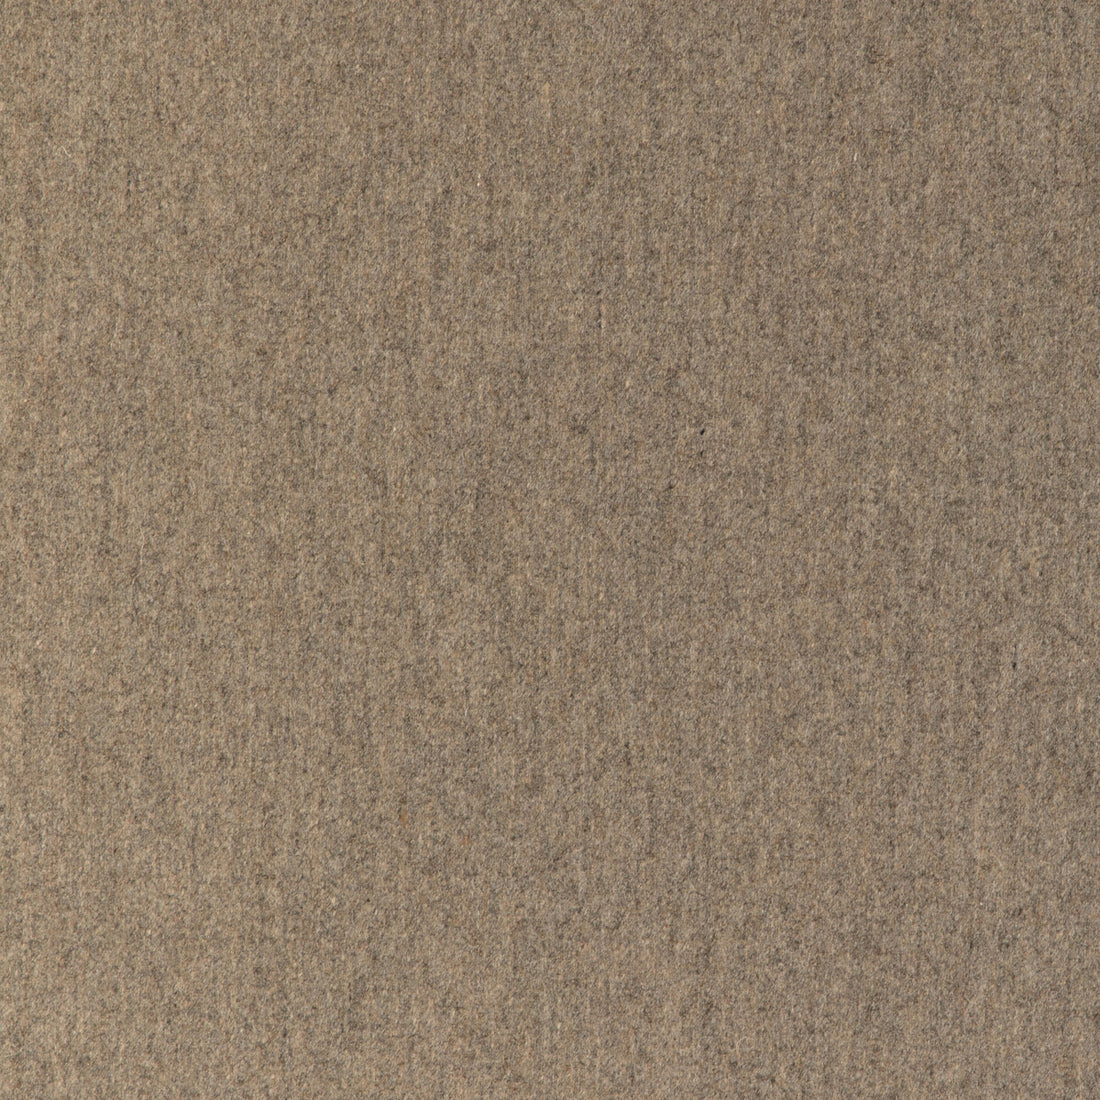 Jefferson Wool fabric in malt color - pattern 34397.1611.0 - by Kravet Contract